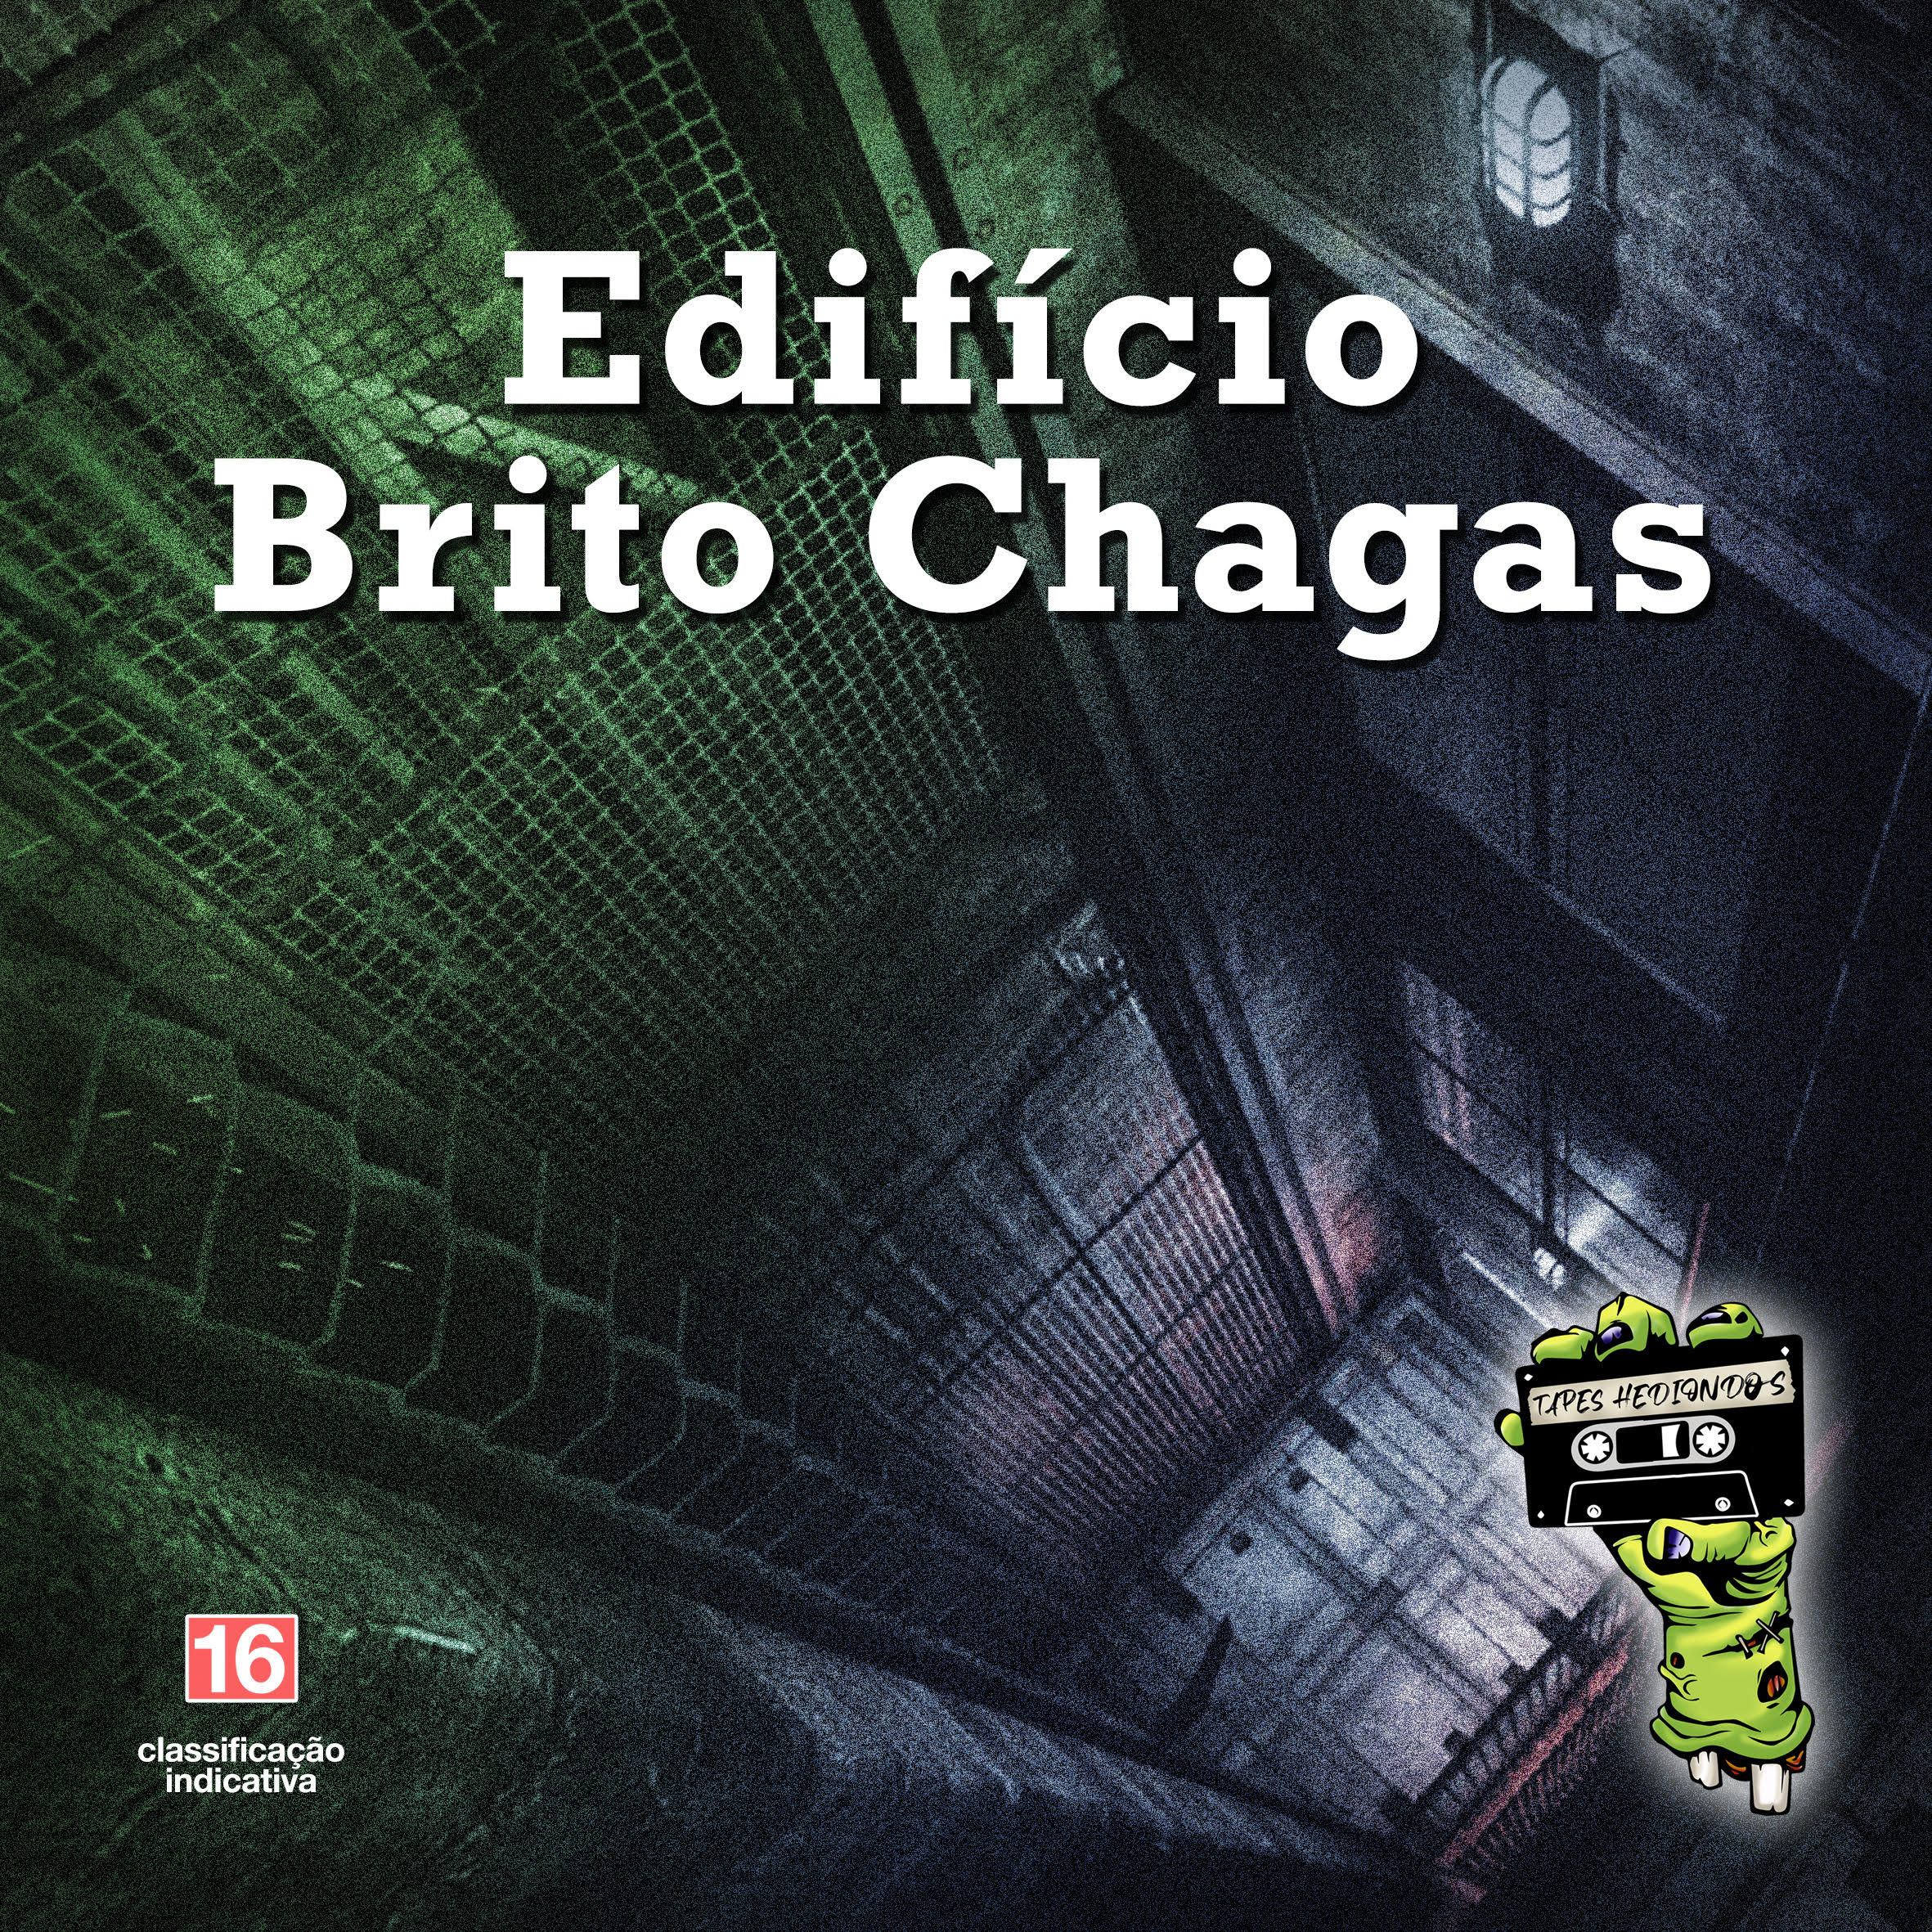 Tapes Hediondos se chama “Edifício Brito Chagas”